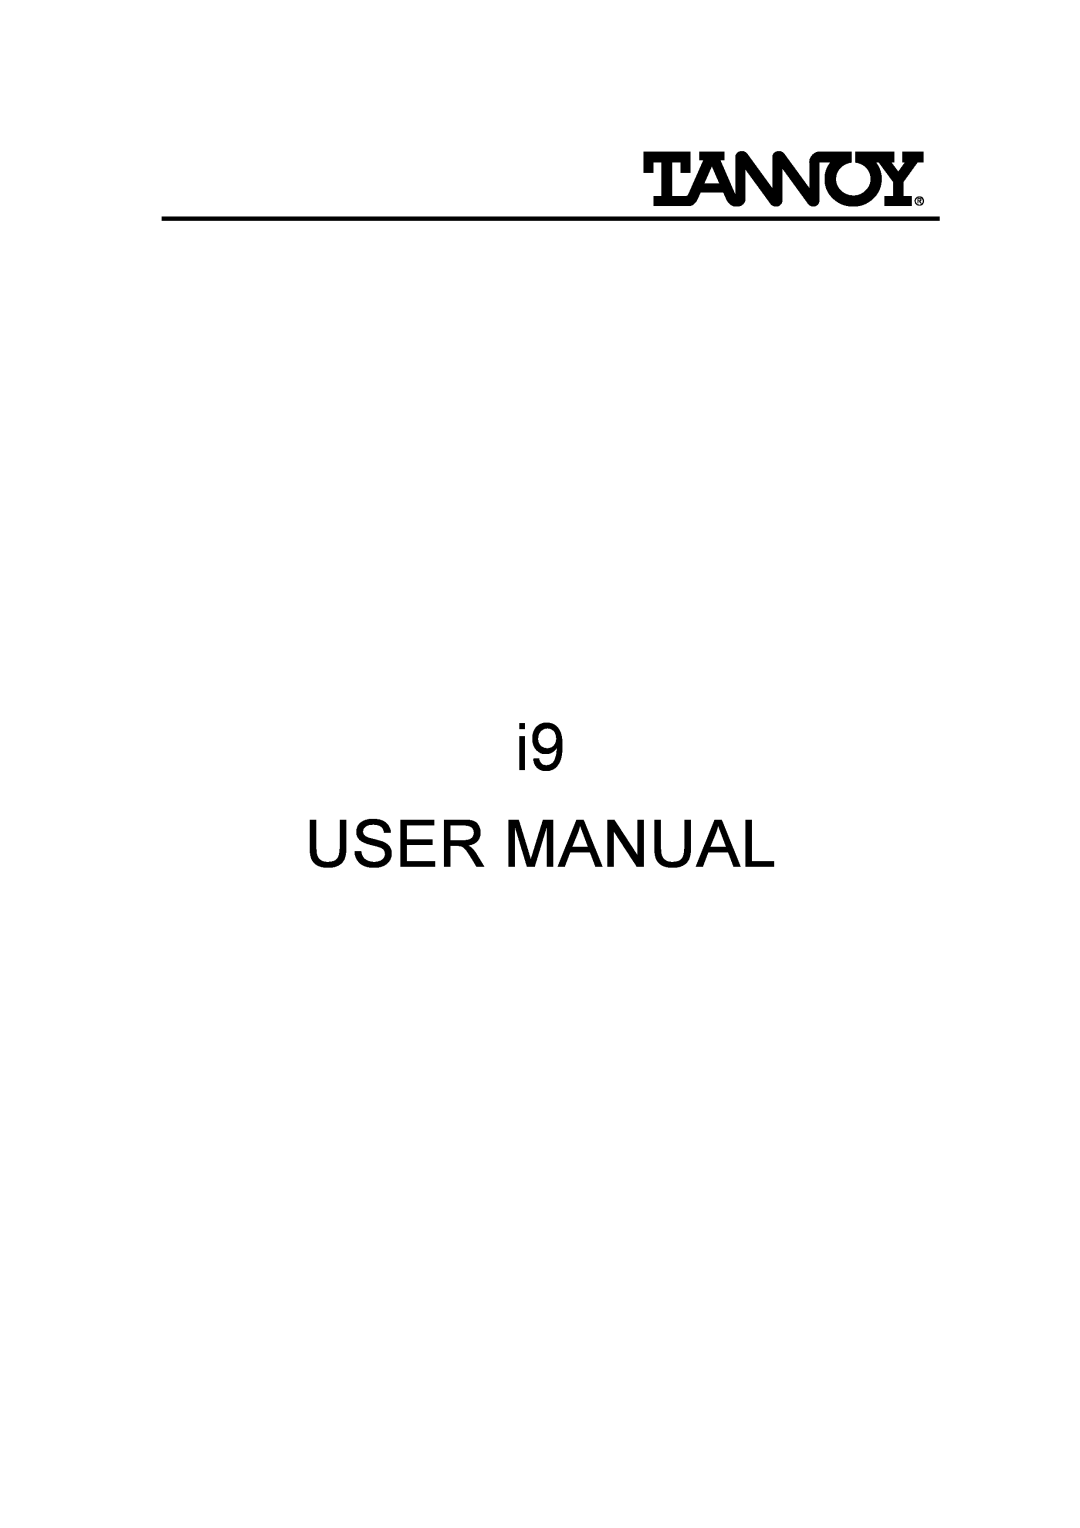 Tannoy I9 user manual 